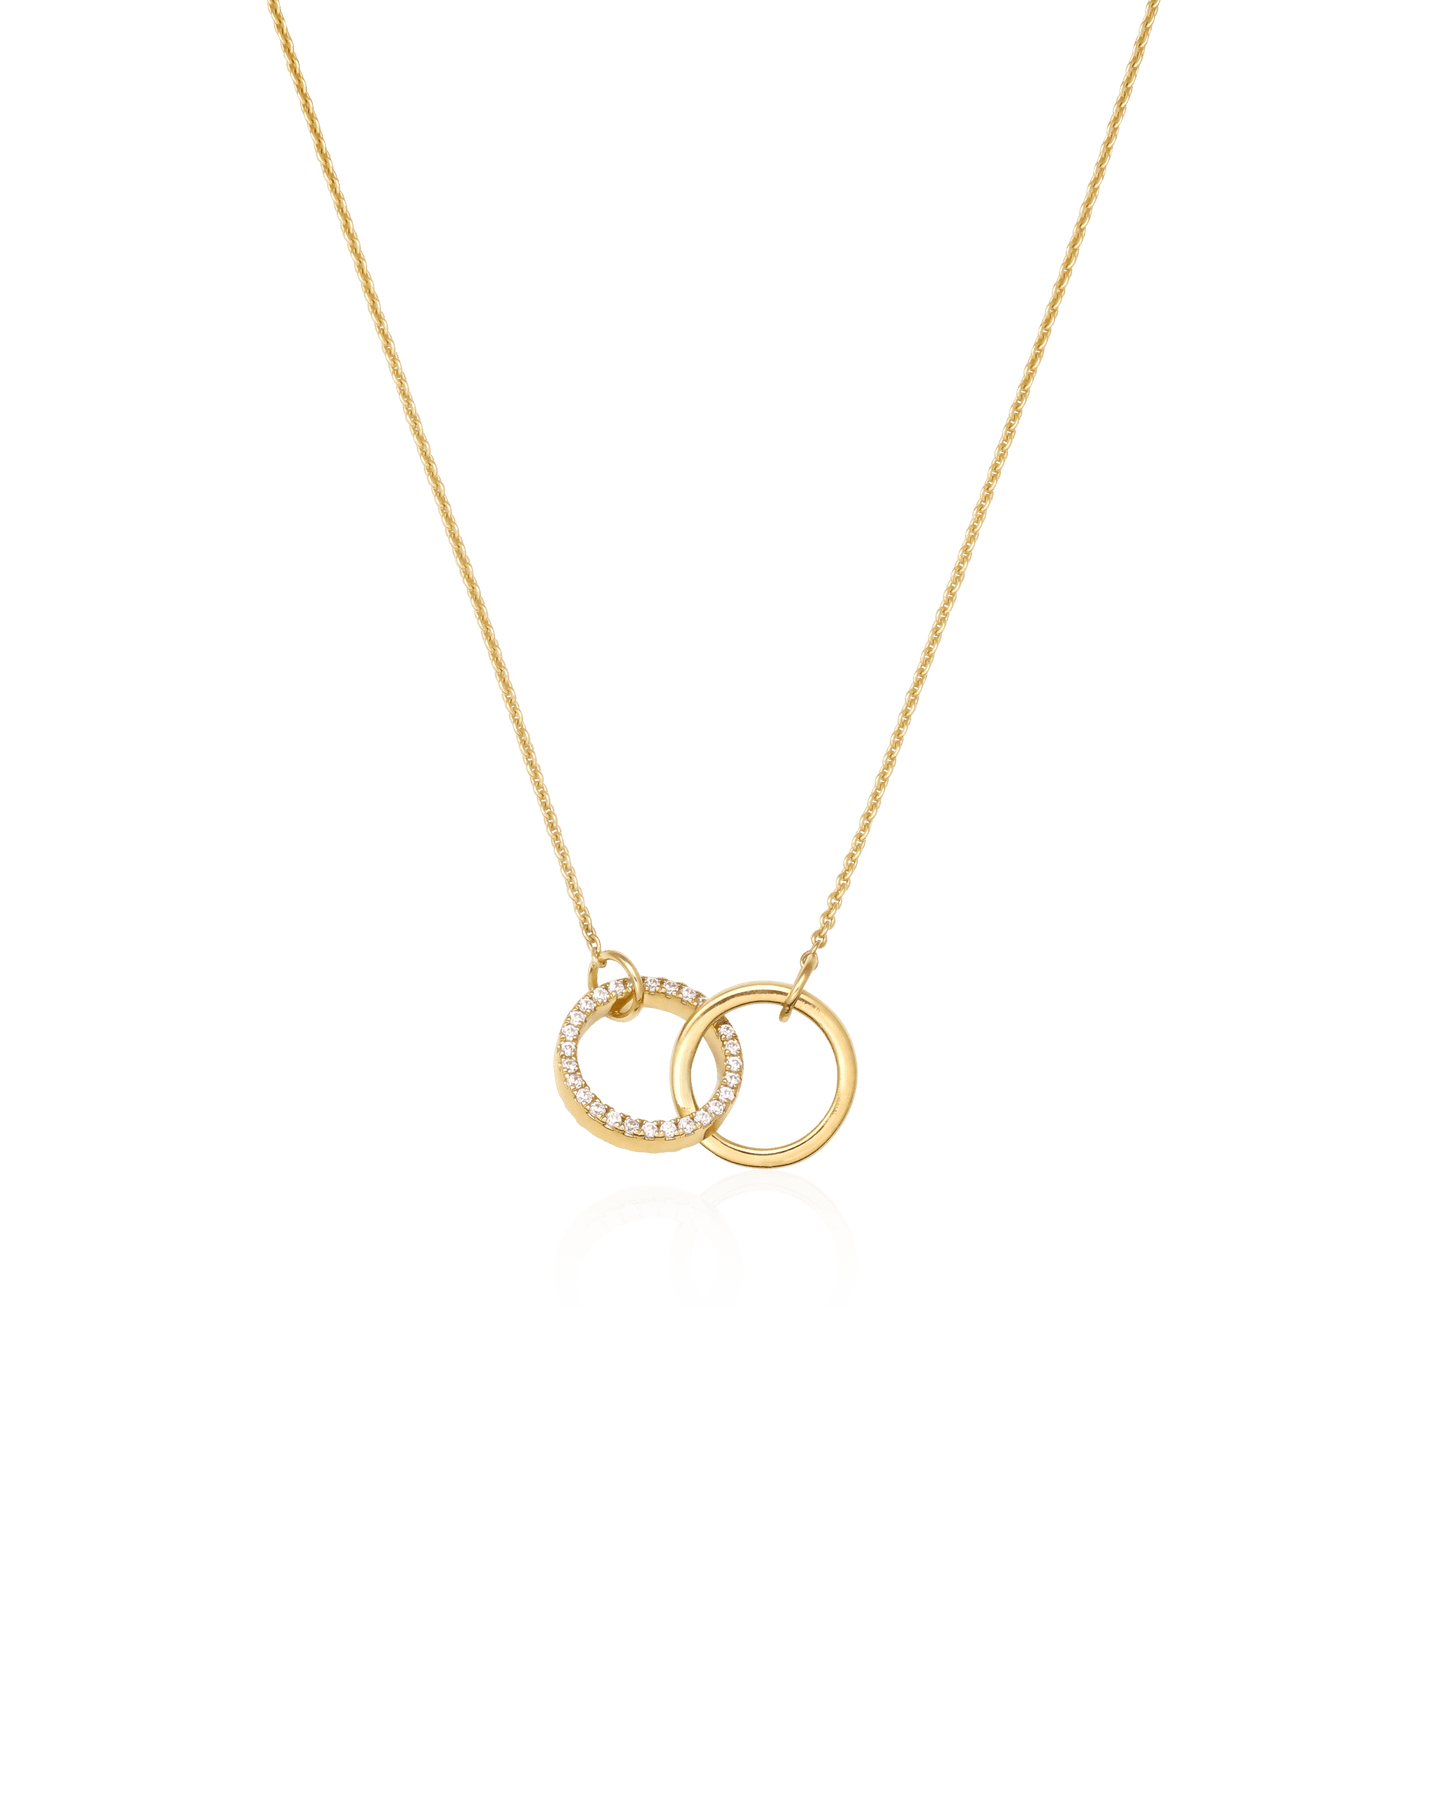 Interlocking Necklace - 925 Sterling Silver Necklaces magal-dev 